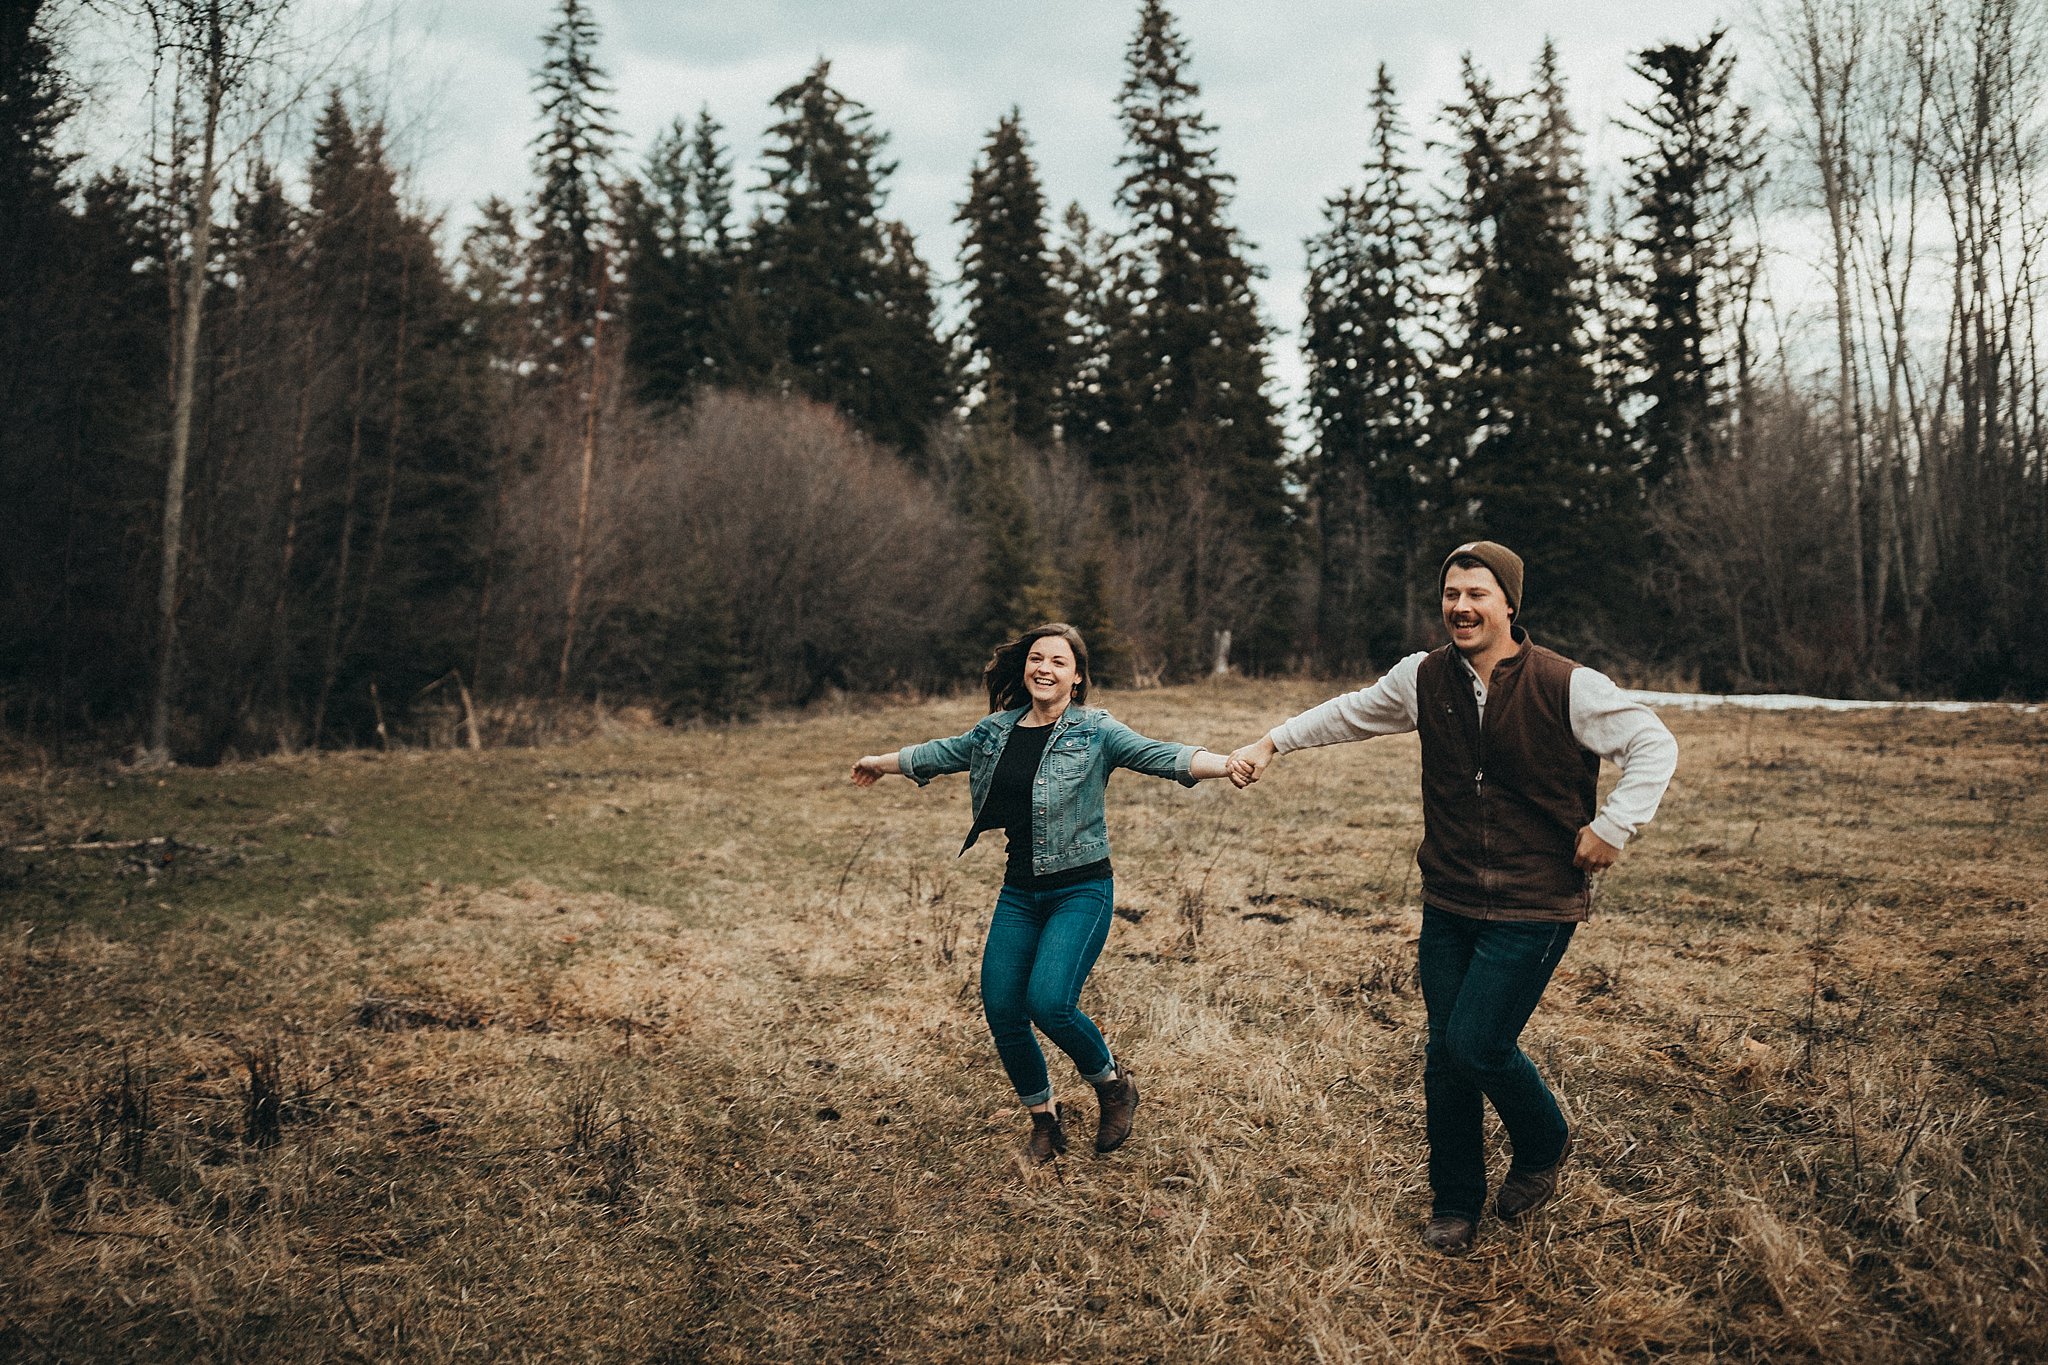 Couple running through field holding hands